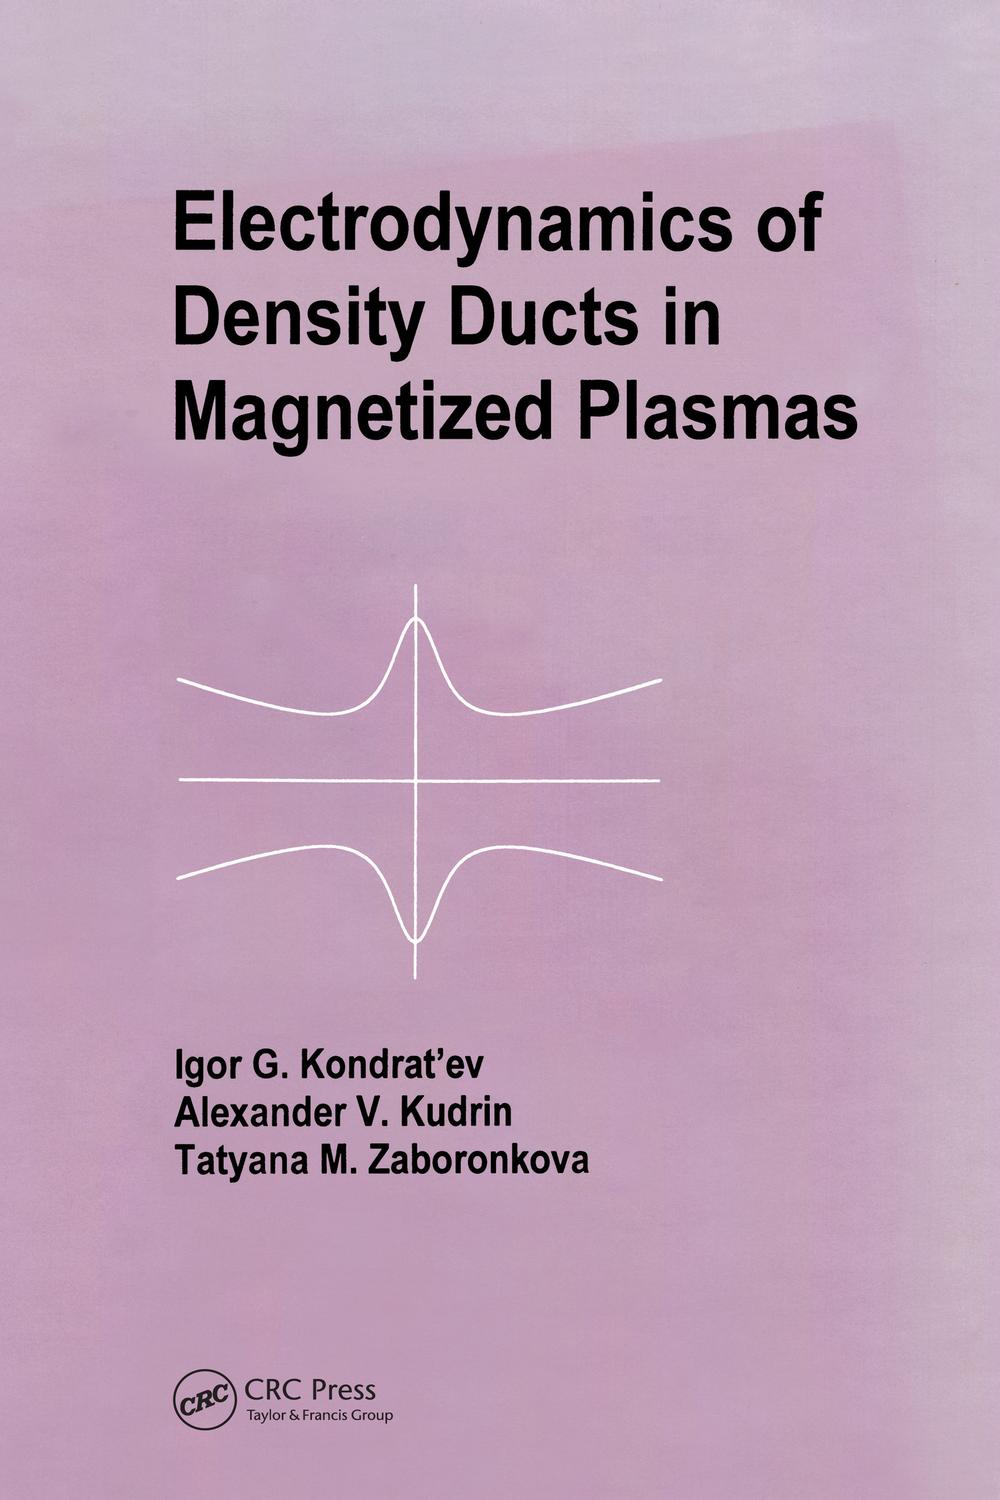 Electrodynamics of Density Ducts in Magnetized Plasmas - I G Kondratiev, A V Kudrin, T M Zaboronkova